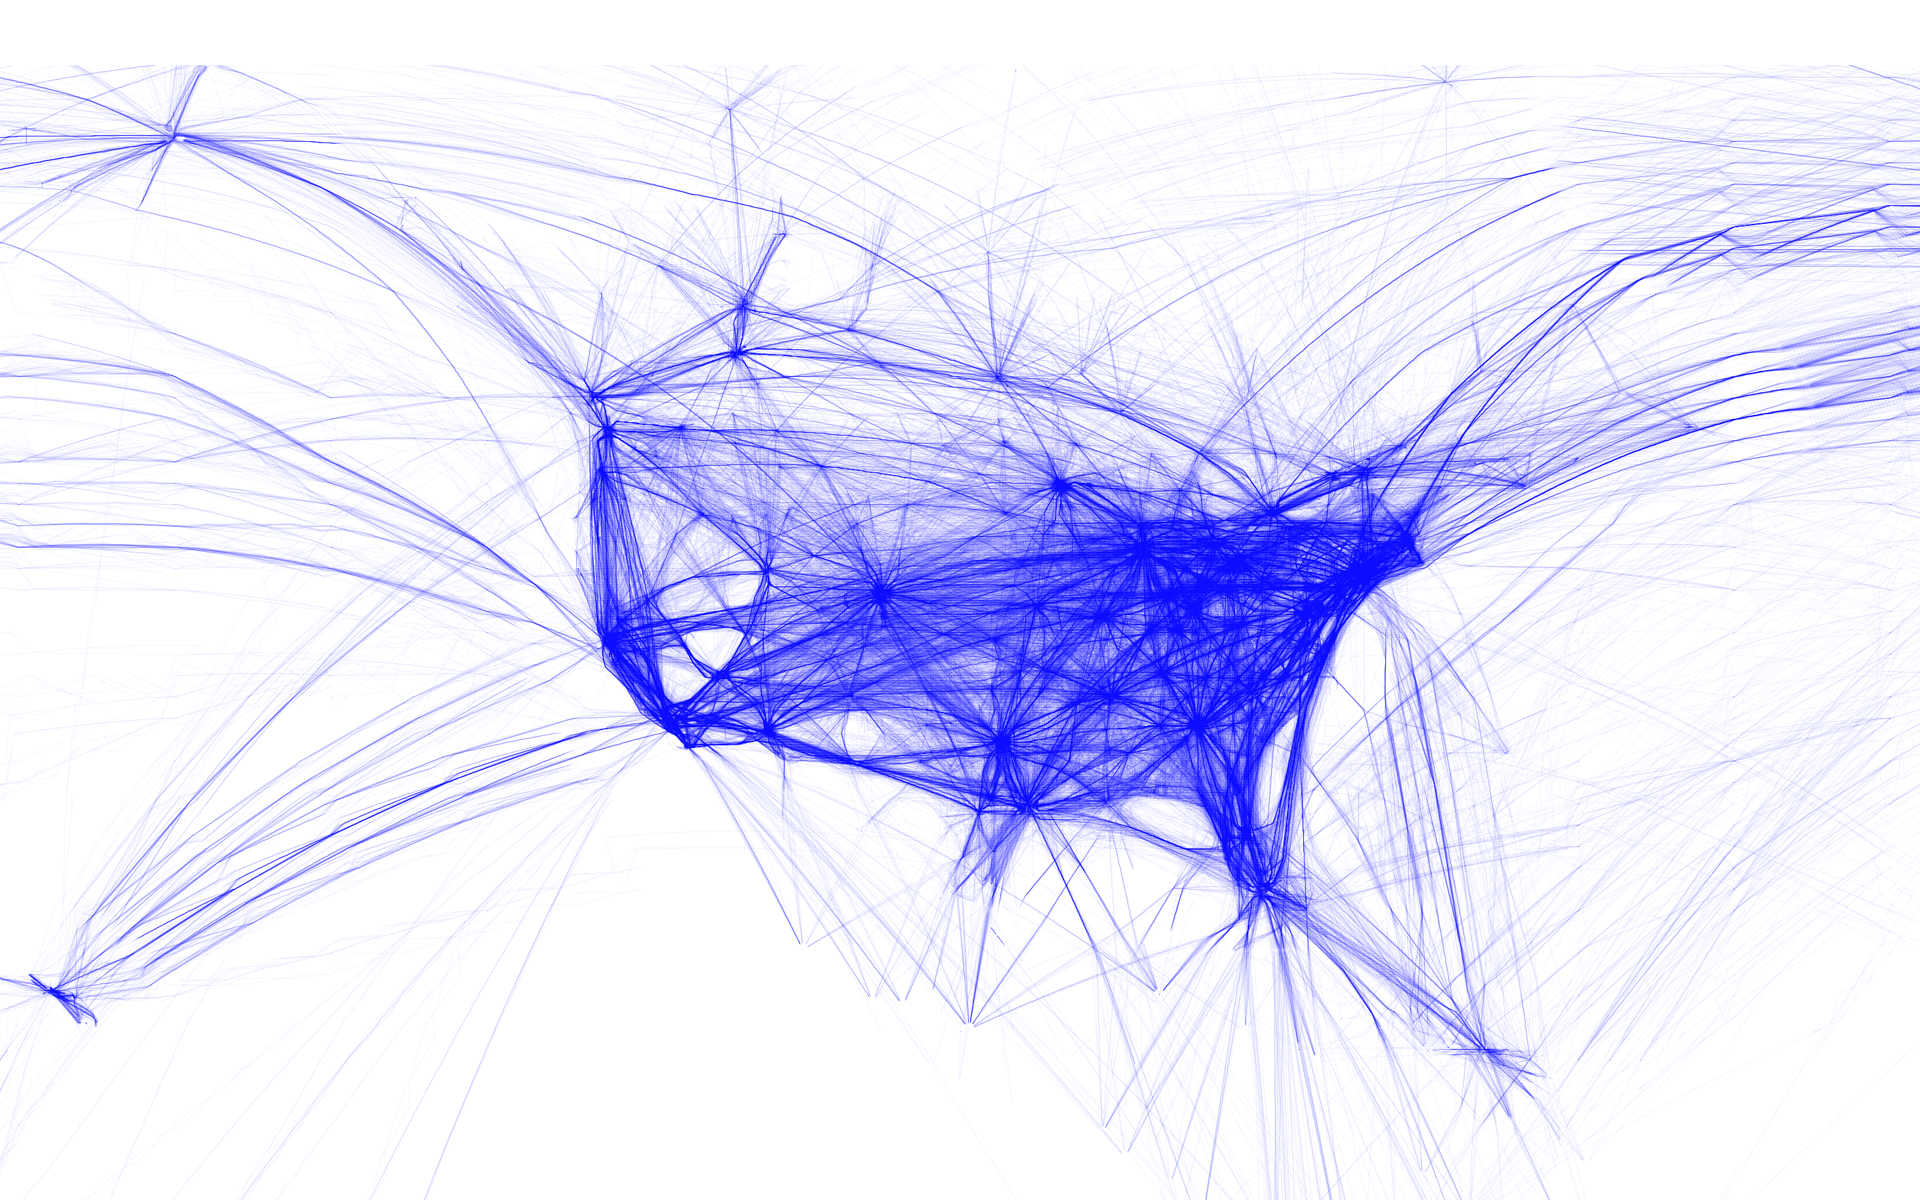 Flight patterns over U.S. [via]